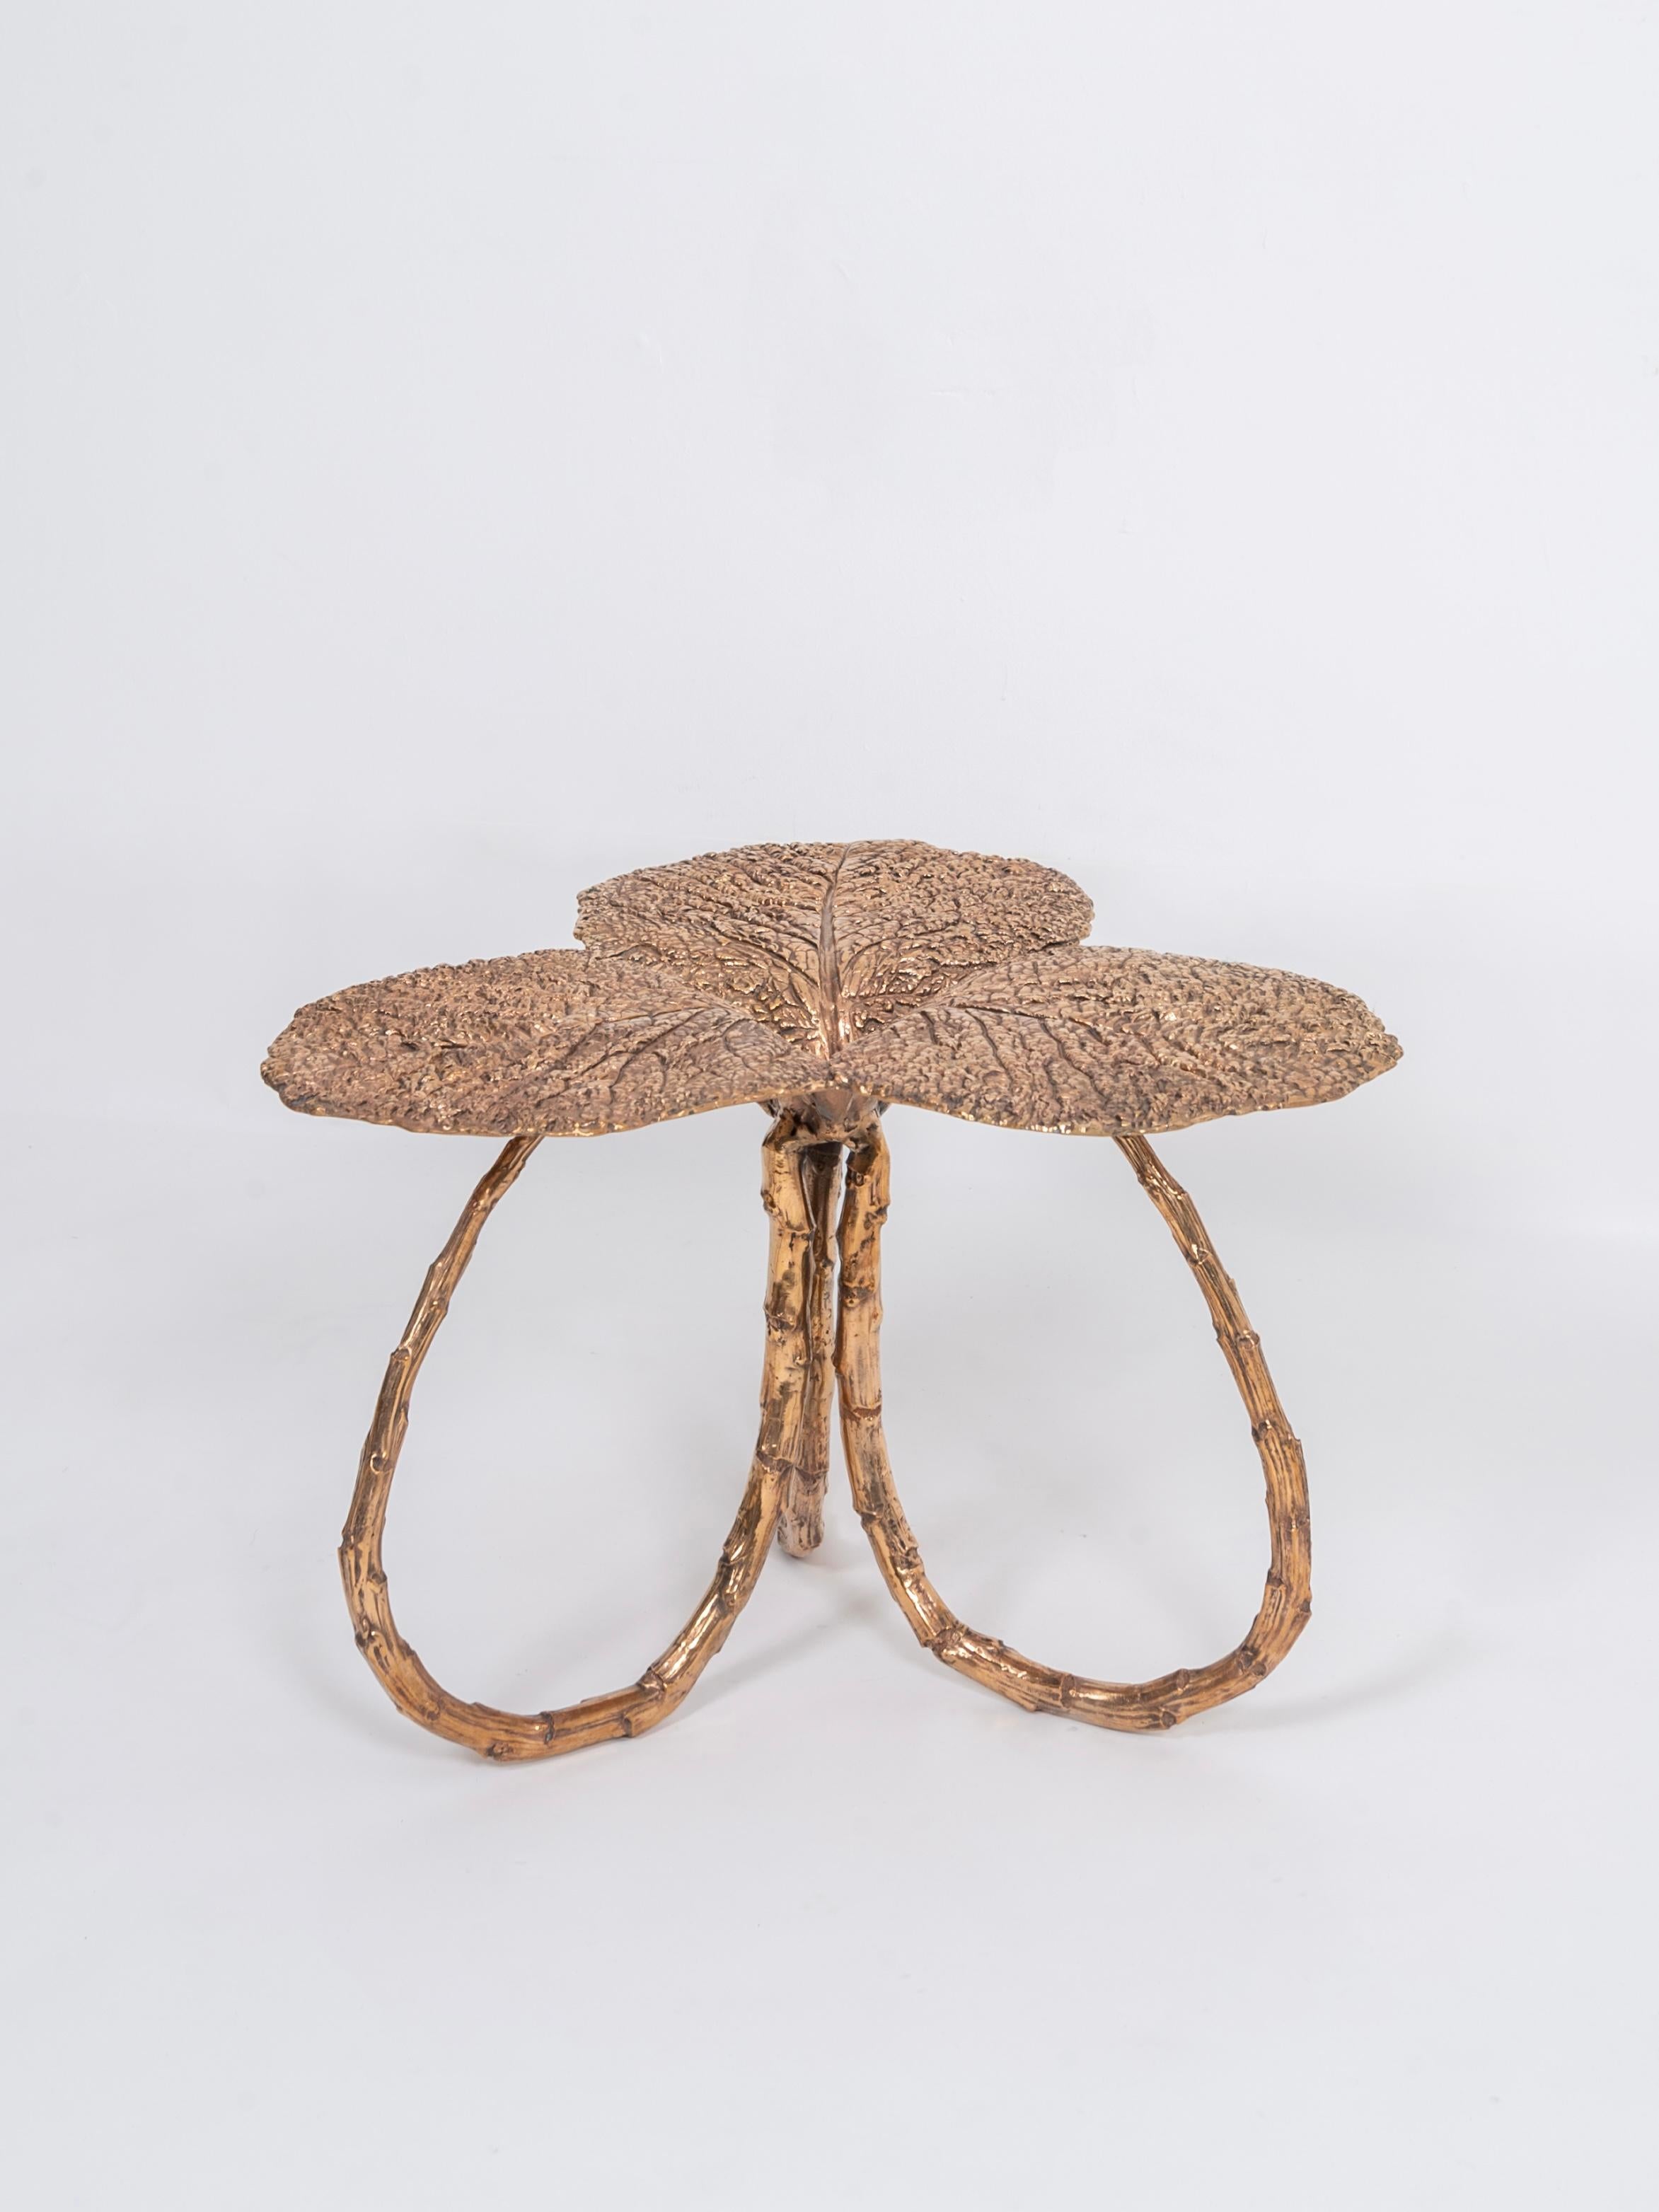 Organic Modern Contemporary Bronze Table 